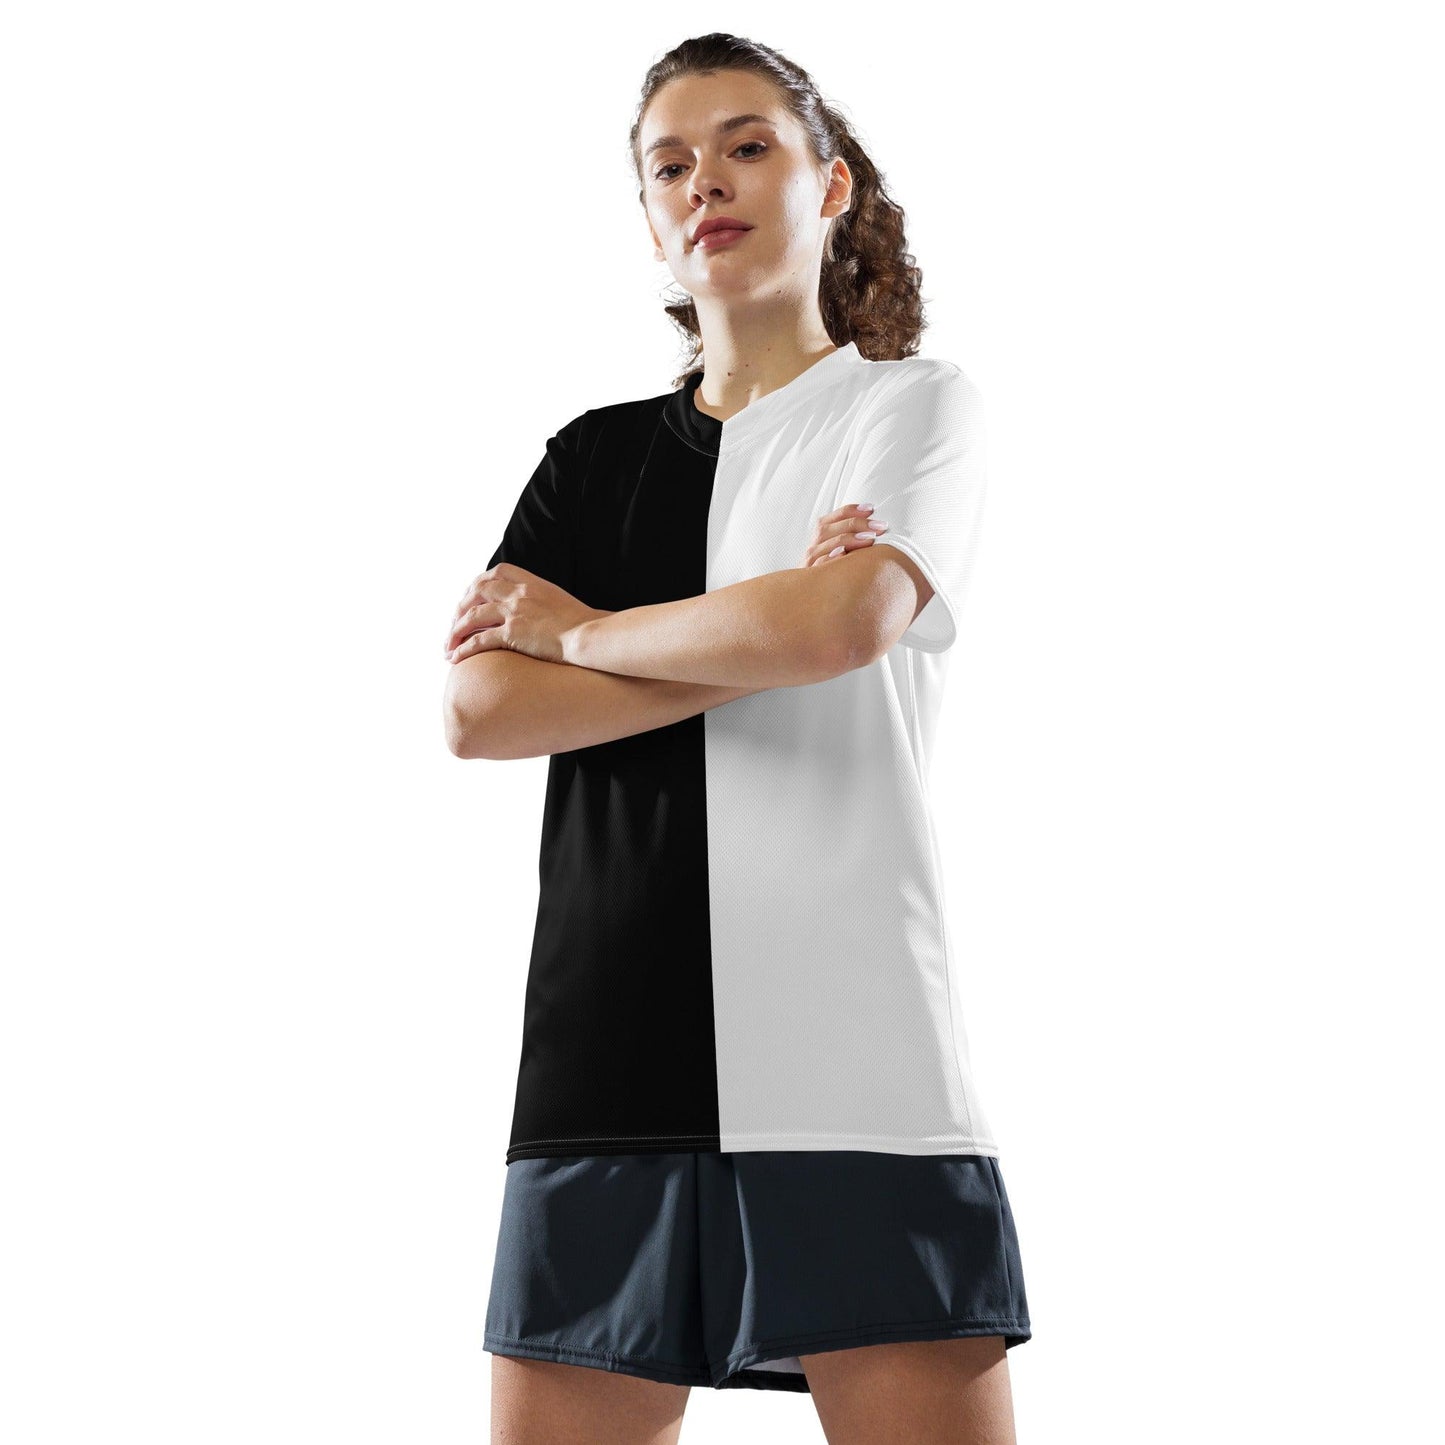 Half Black Half White - Unisex Sports Jersey - iSAW Company